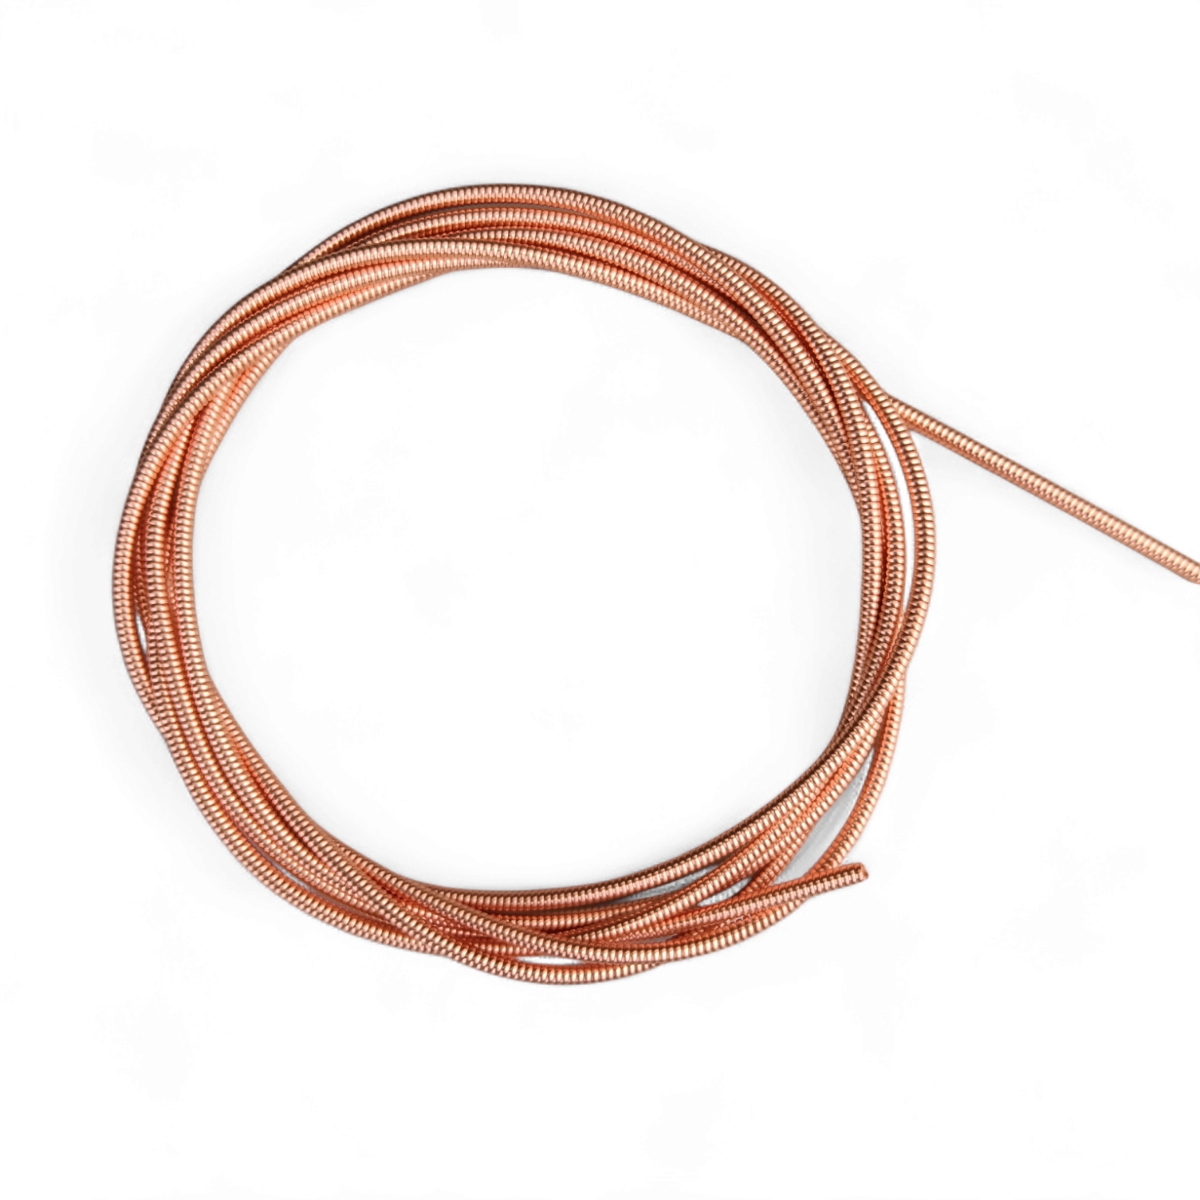 1 Metre 1.9mm Diameter Perl Wire ROSE GOLD Coloured Copper